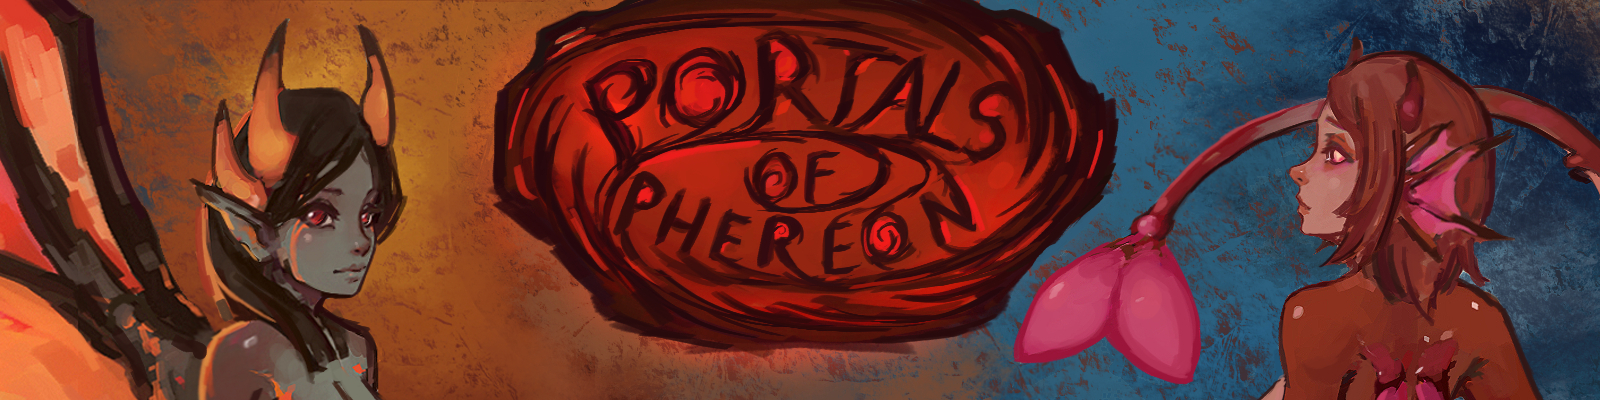 Portals of Phereon [v0.11.0.1] main image